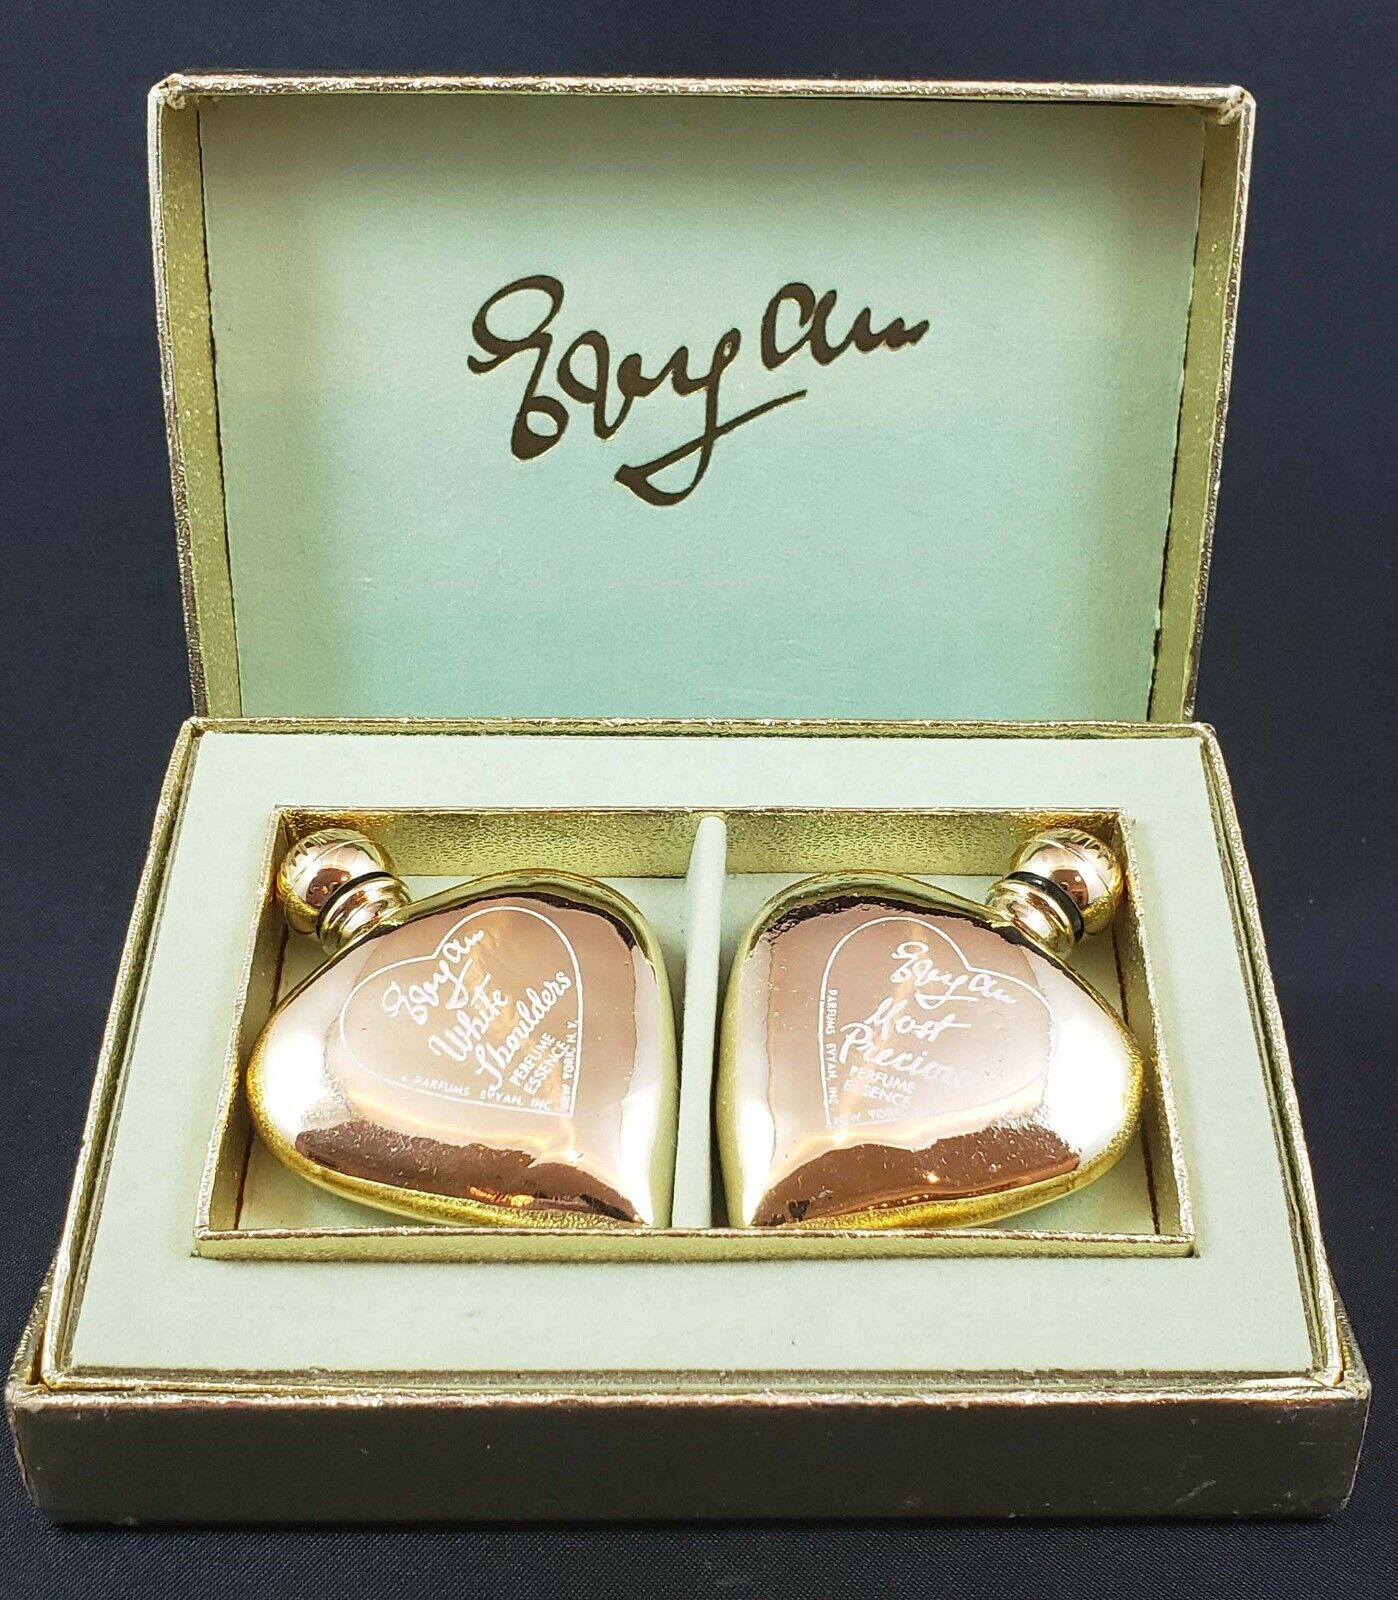 Evyan Two Golden Hearts Perfume Set in Box White Shoulders & Most Precious RARE